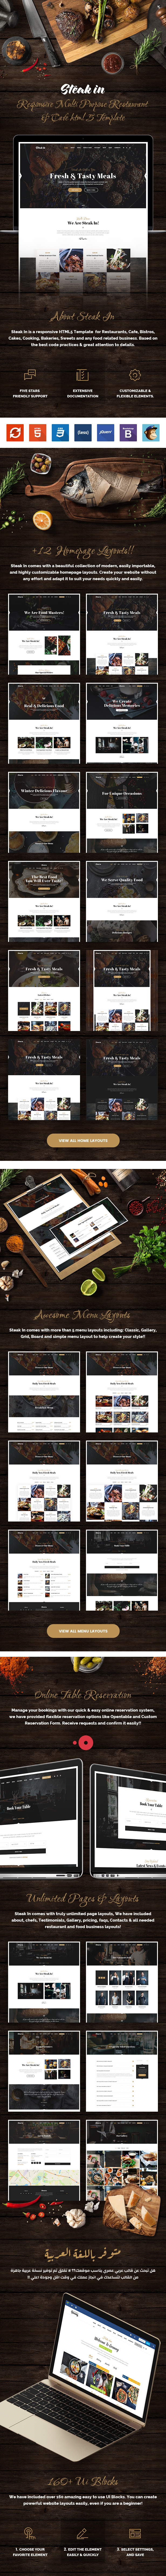 Steak In - Restaurant & Cafe HTML5 Template - 2